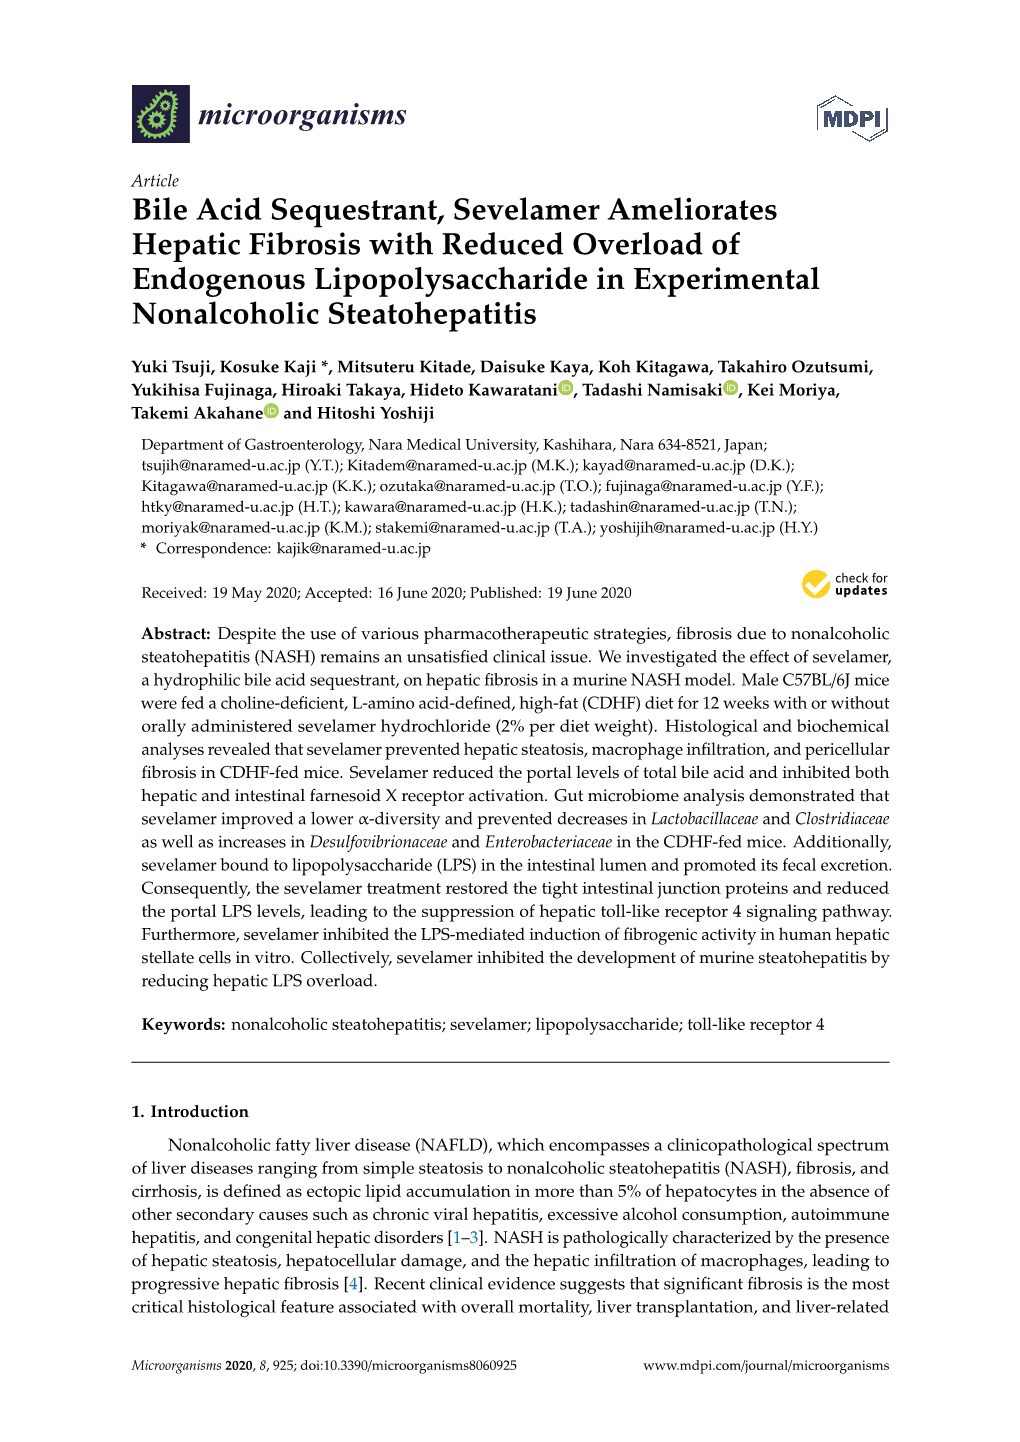 Bile Acid Sequestrant, Sevelamer Ameliorates Hepatic Fibrosis with Reduced Overload of Endogenous Lipopolysaccharide in Experimental Nonalcoholic Steatohepatitis